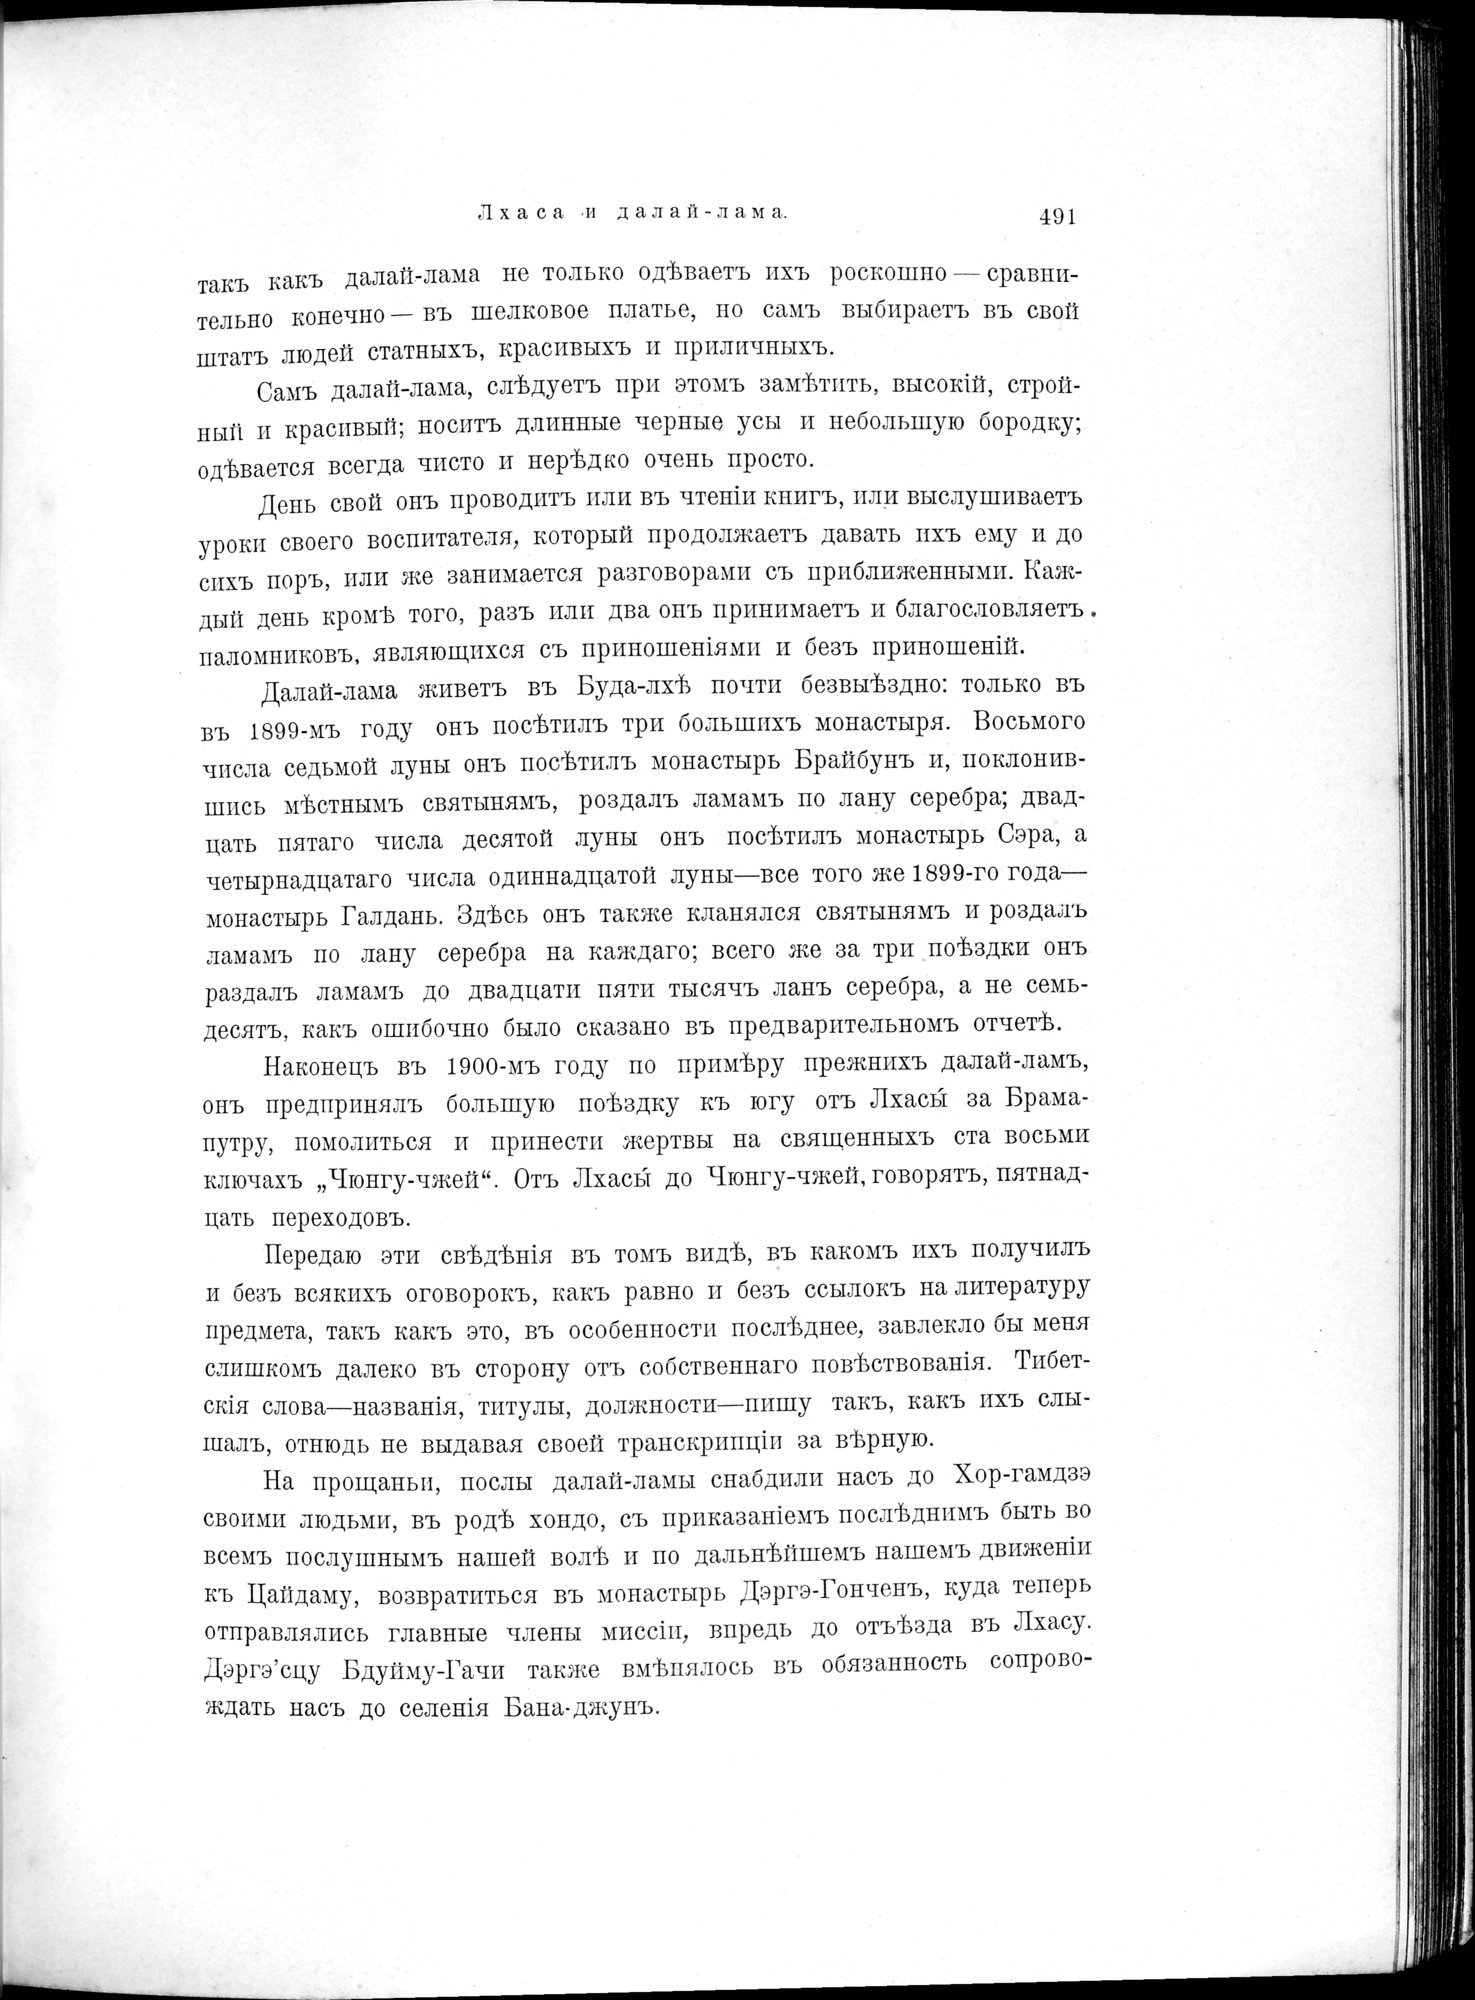 Mongoliia i Kam : vol.2 / Page 307 (Grayscale High Resolution Image)